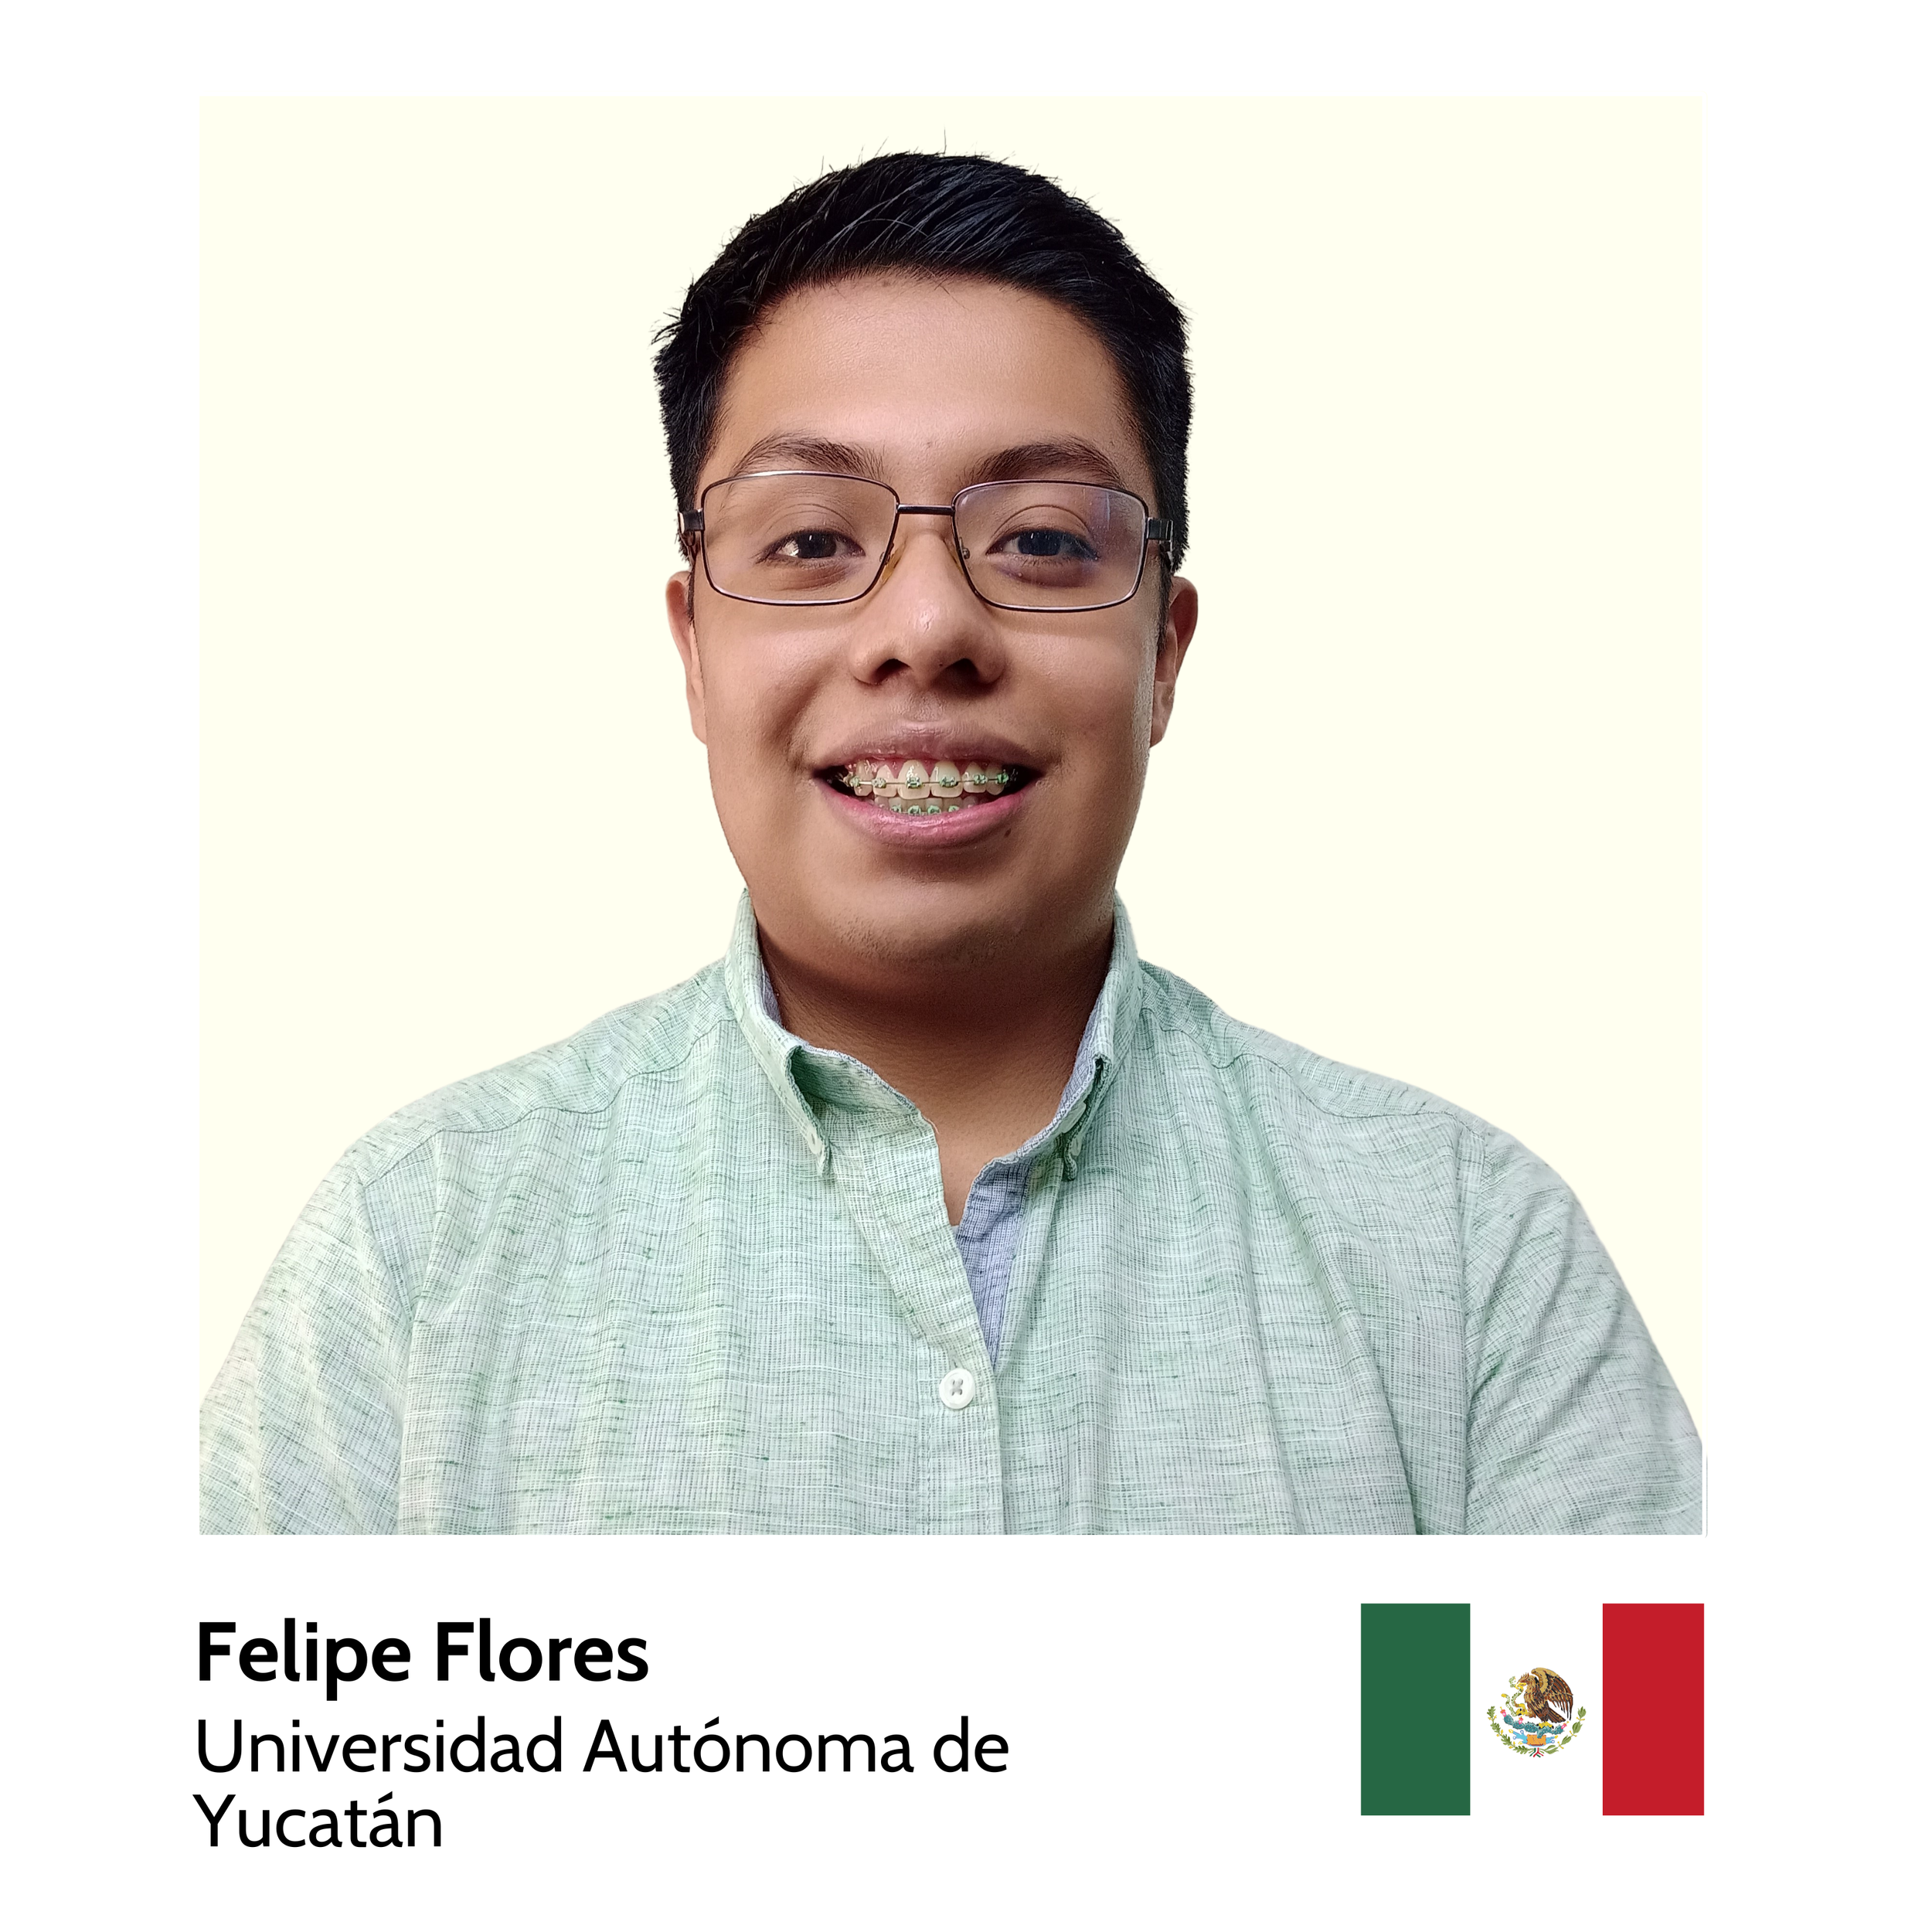 Your_Big_Year_ibm_z_student_ambassador_Felipe_Flores_Universidad_Autónoma_de_Yucatán.png